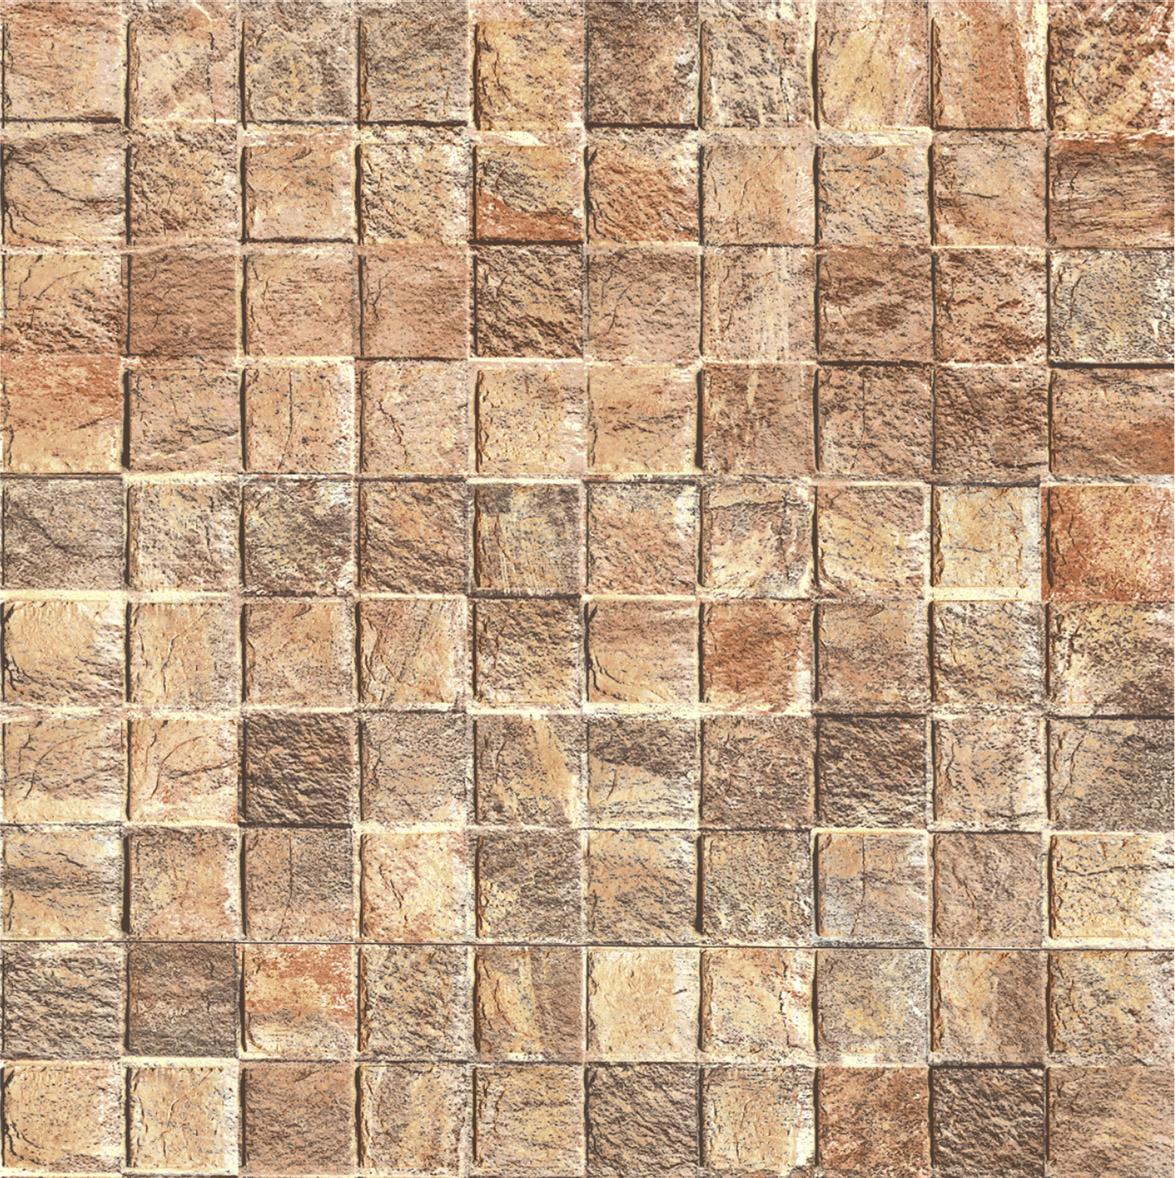 Glass Mosaic Tiles for Bathroom Tiles, Kitchen Tiles, Dining Room Tiles